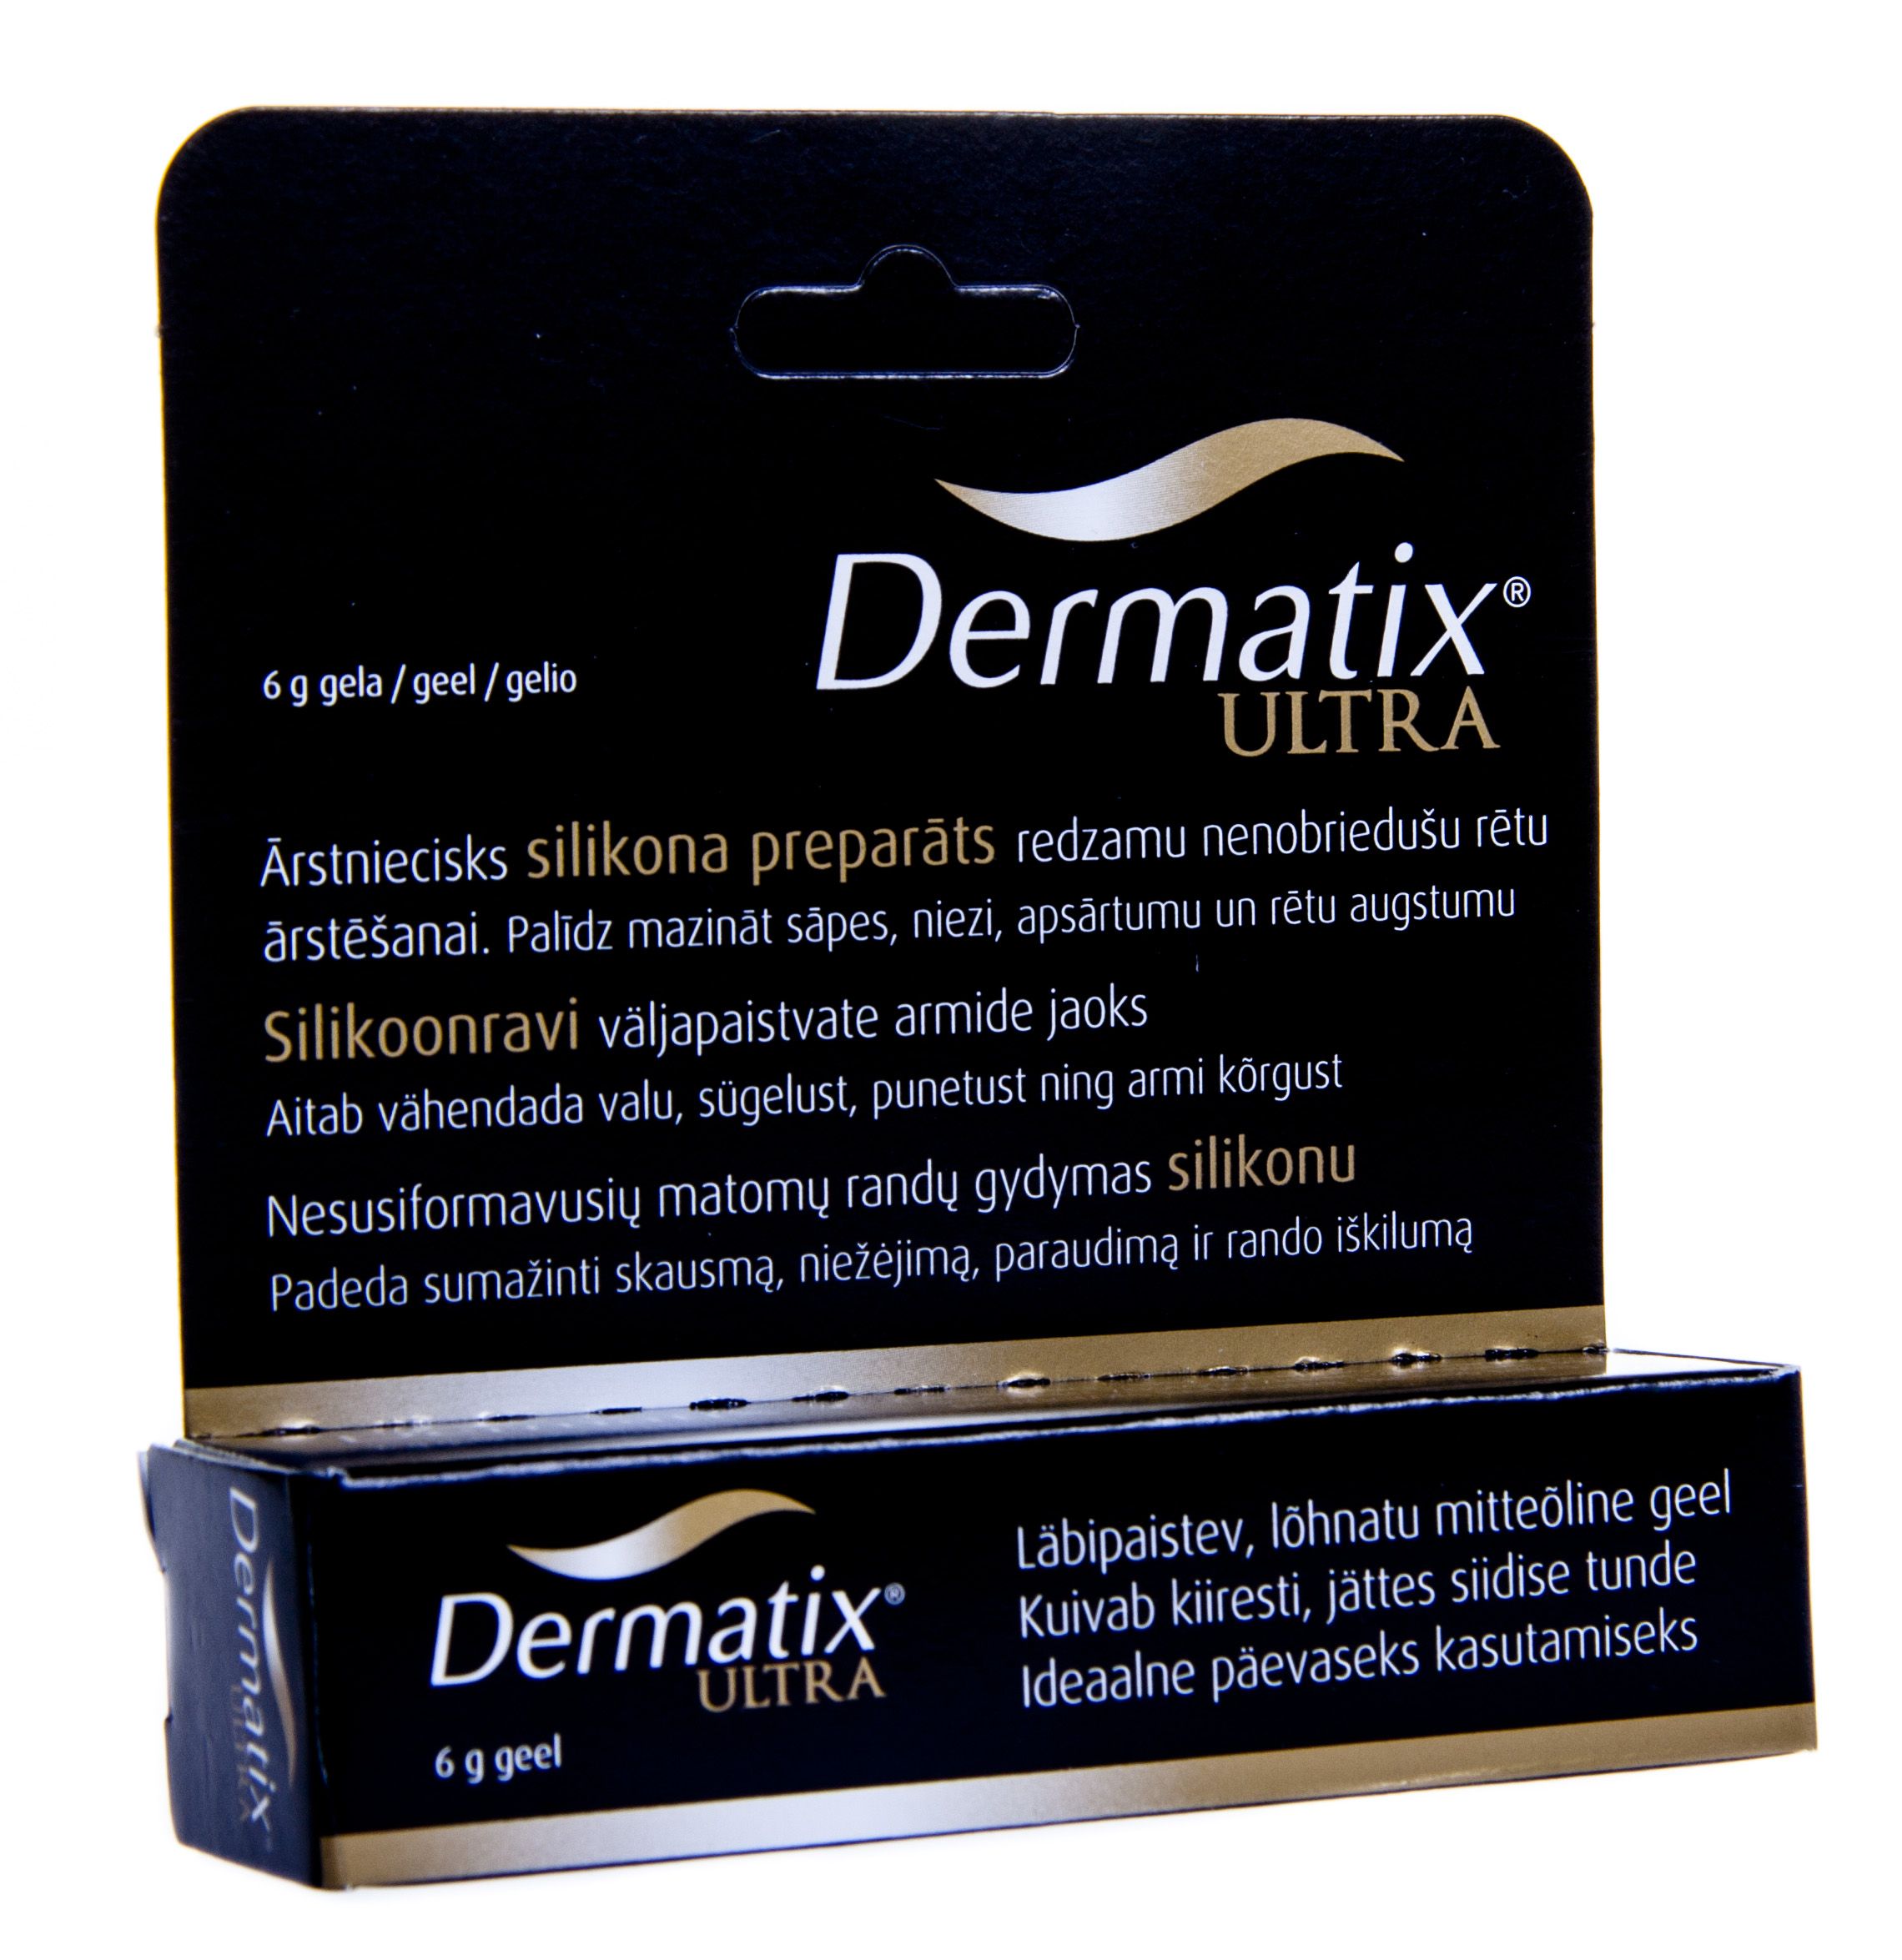 Dermatix Ultra haavageel